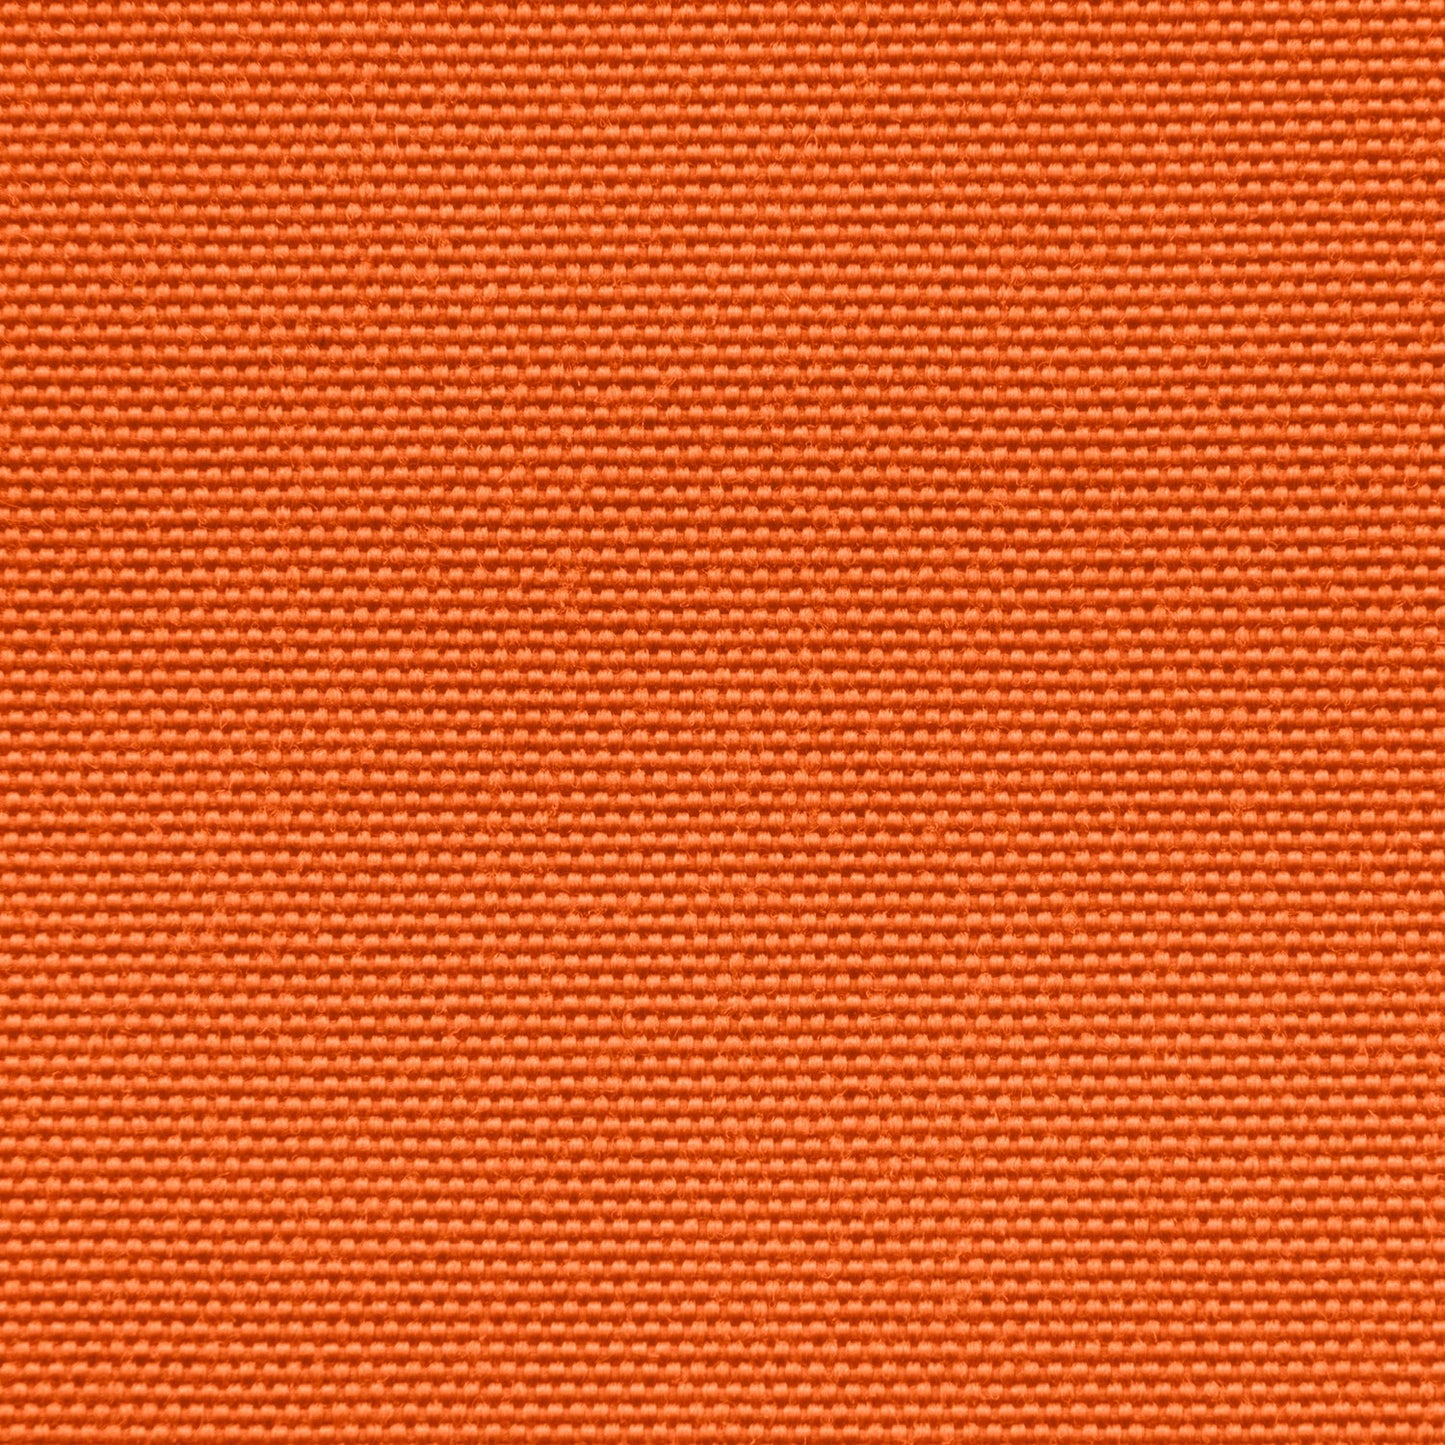 Sitzsack Seat Colorin Orange